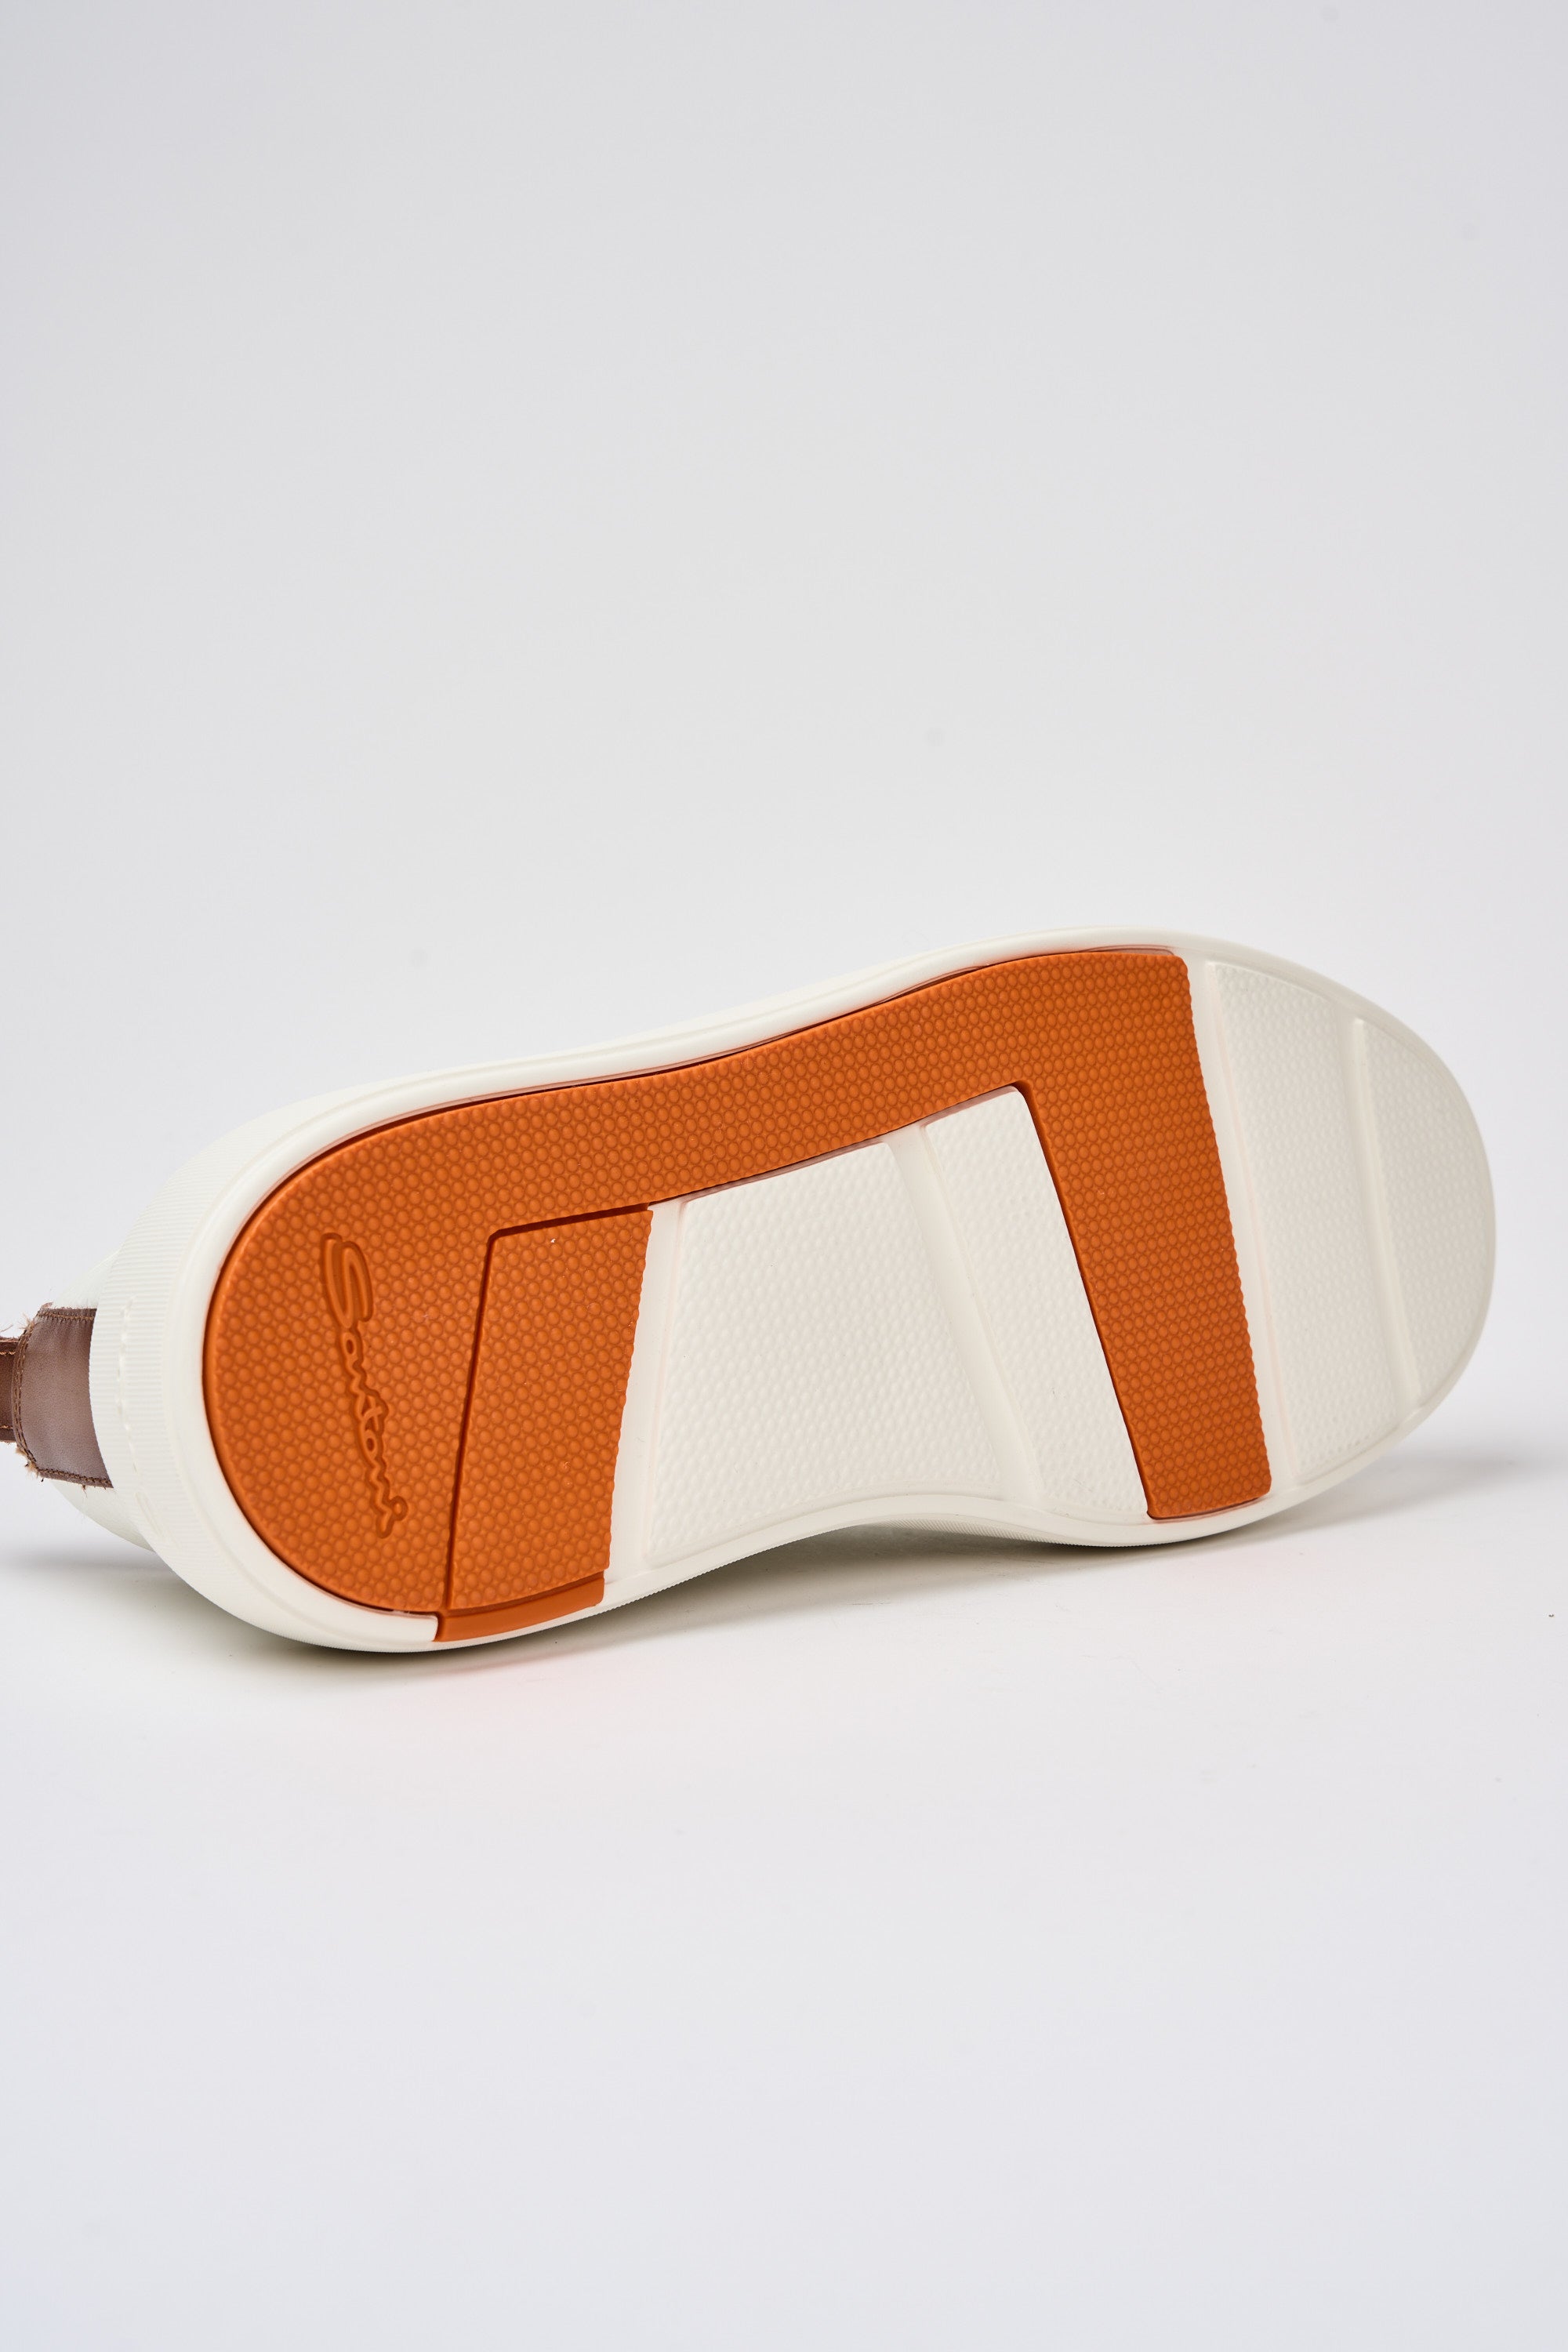 Santoni Slip-On-Sneakers aus weißem Leder-7